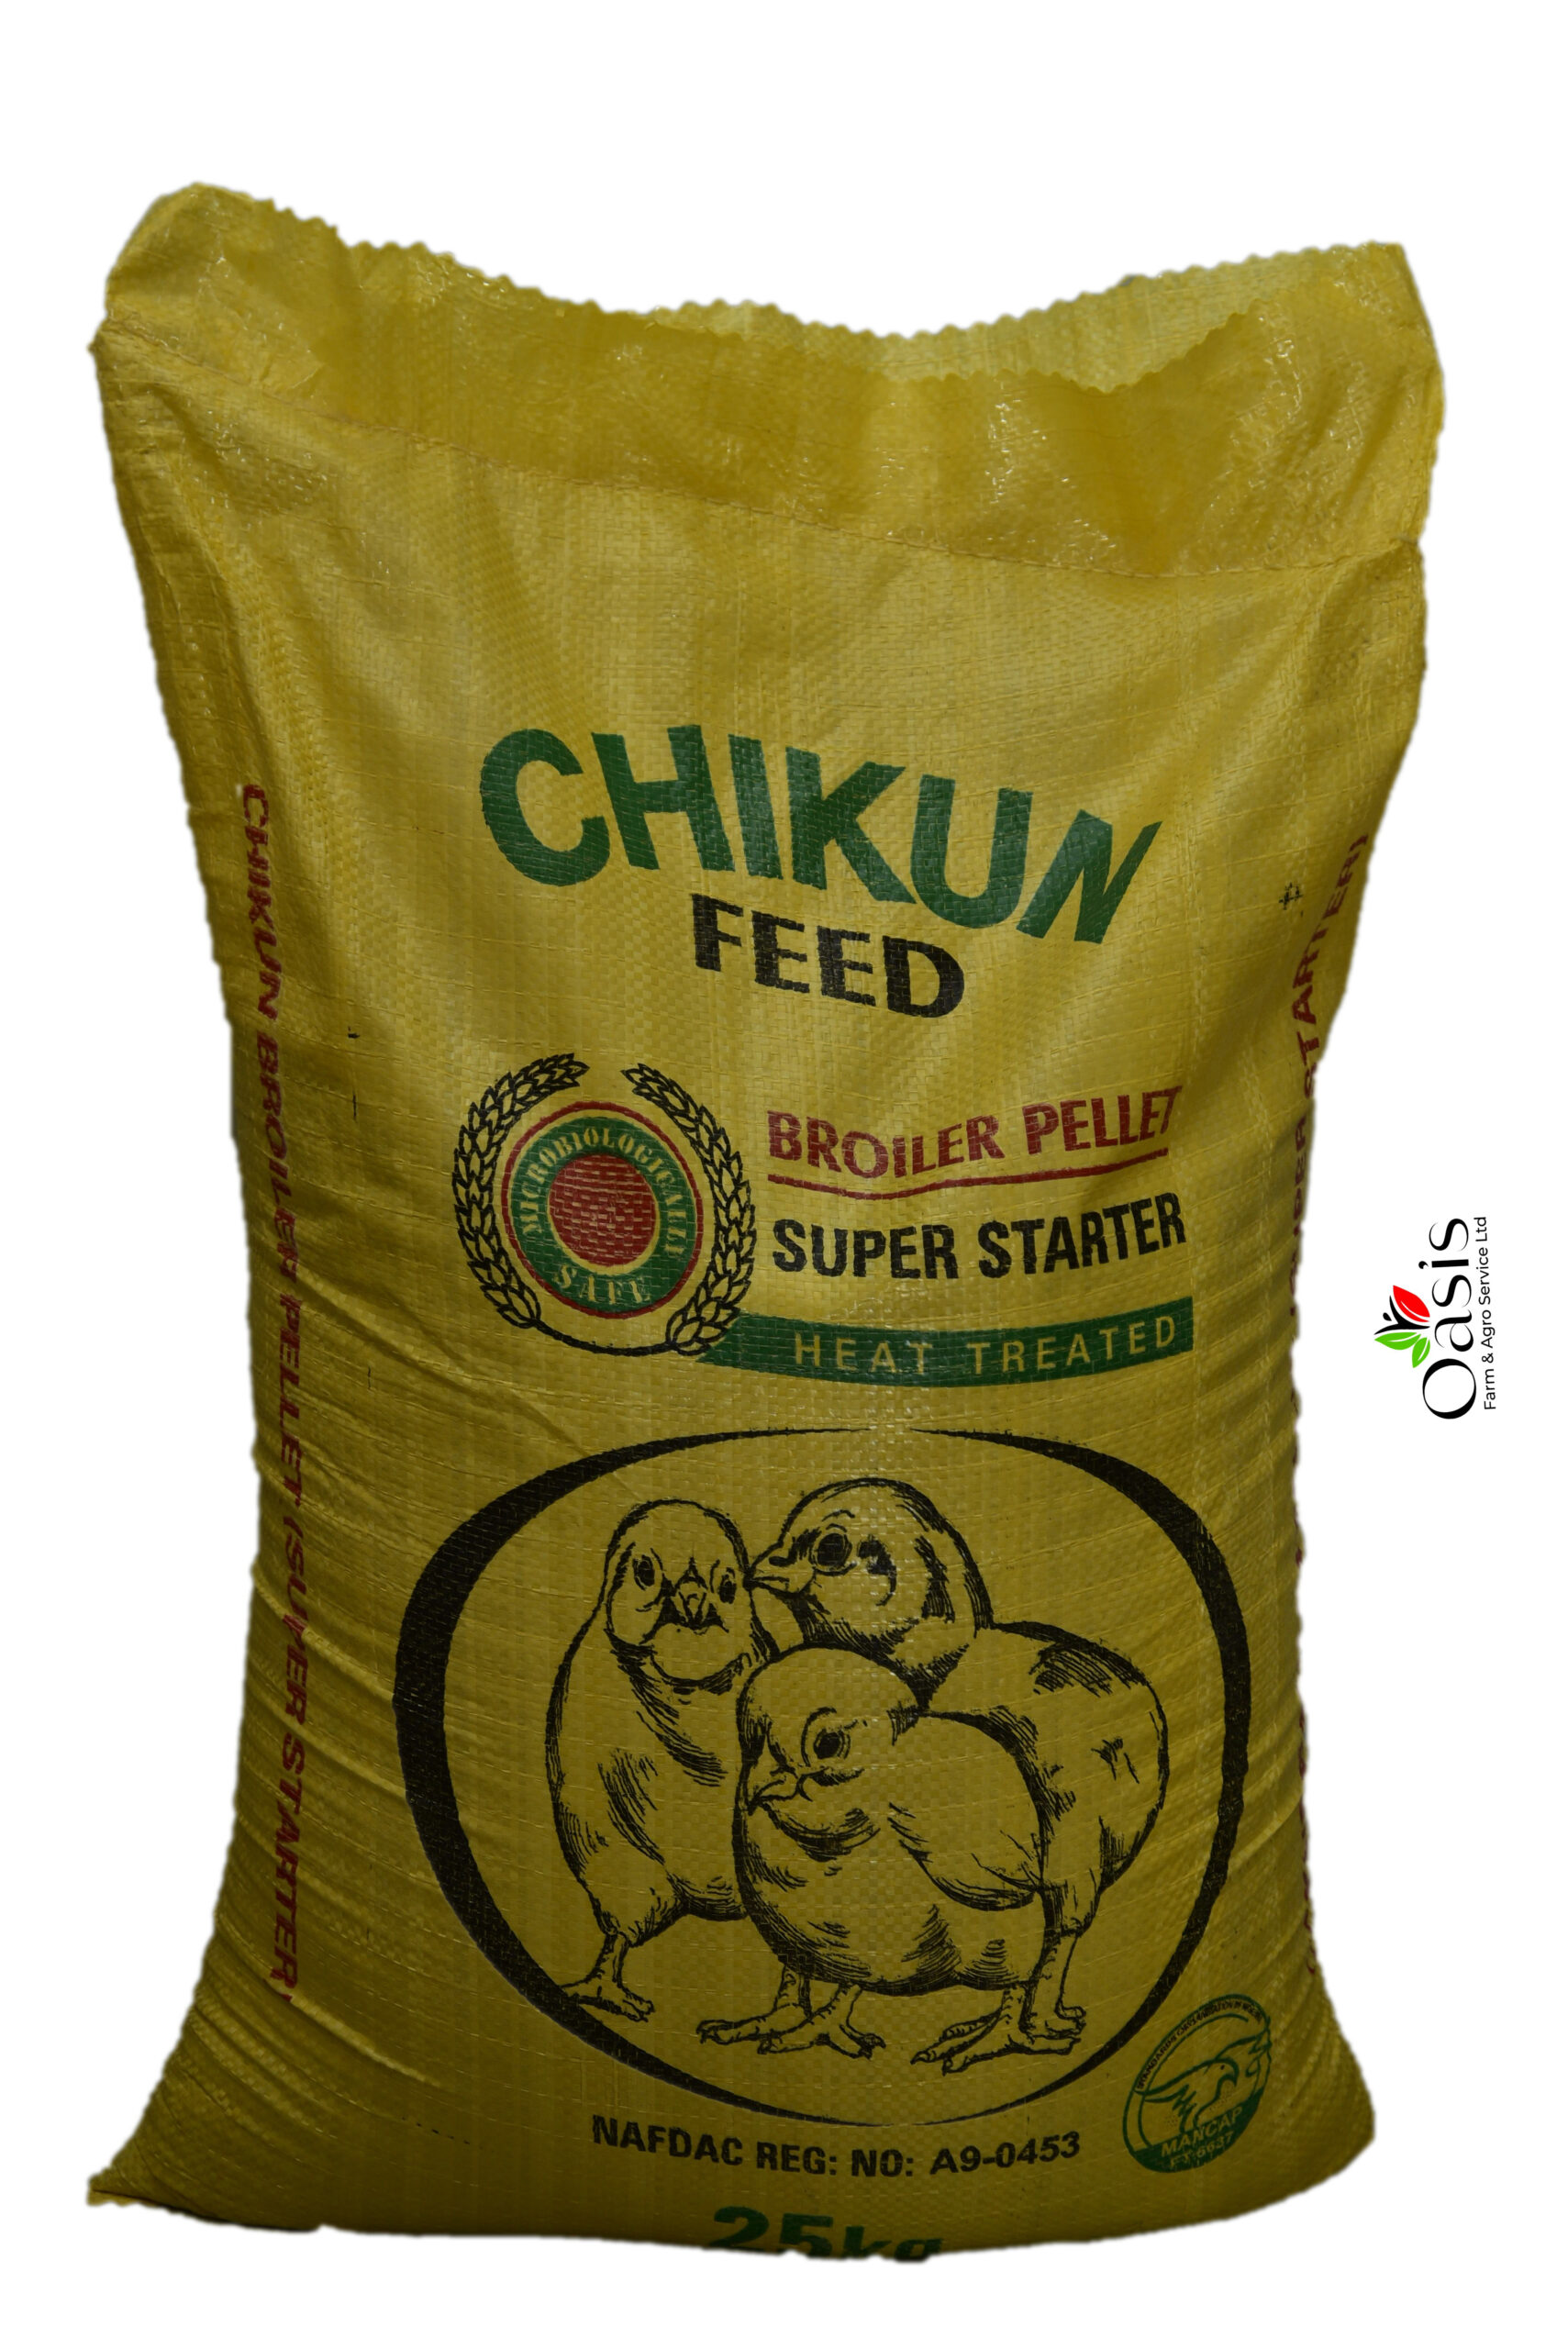 CHIKUN FEED BROILER PELLET SUPER STARTER (25Kg)